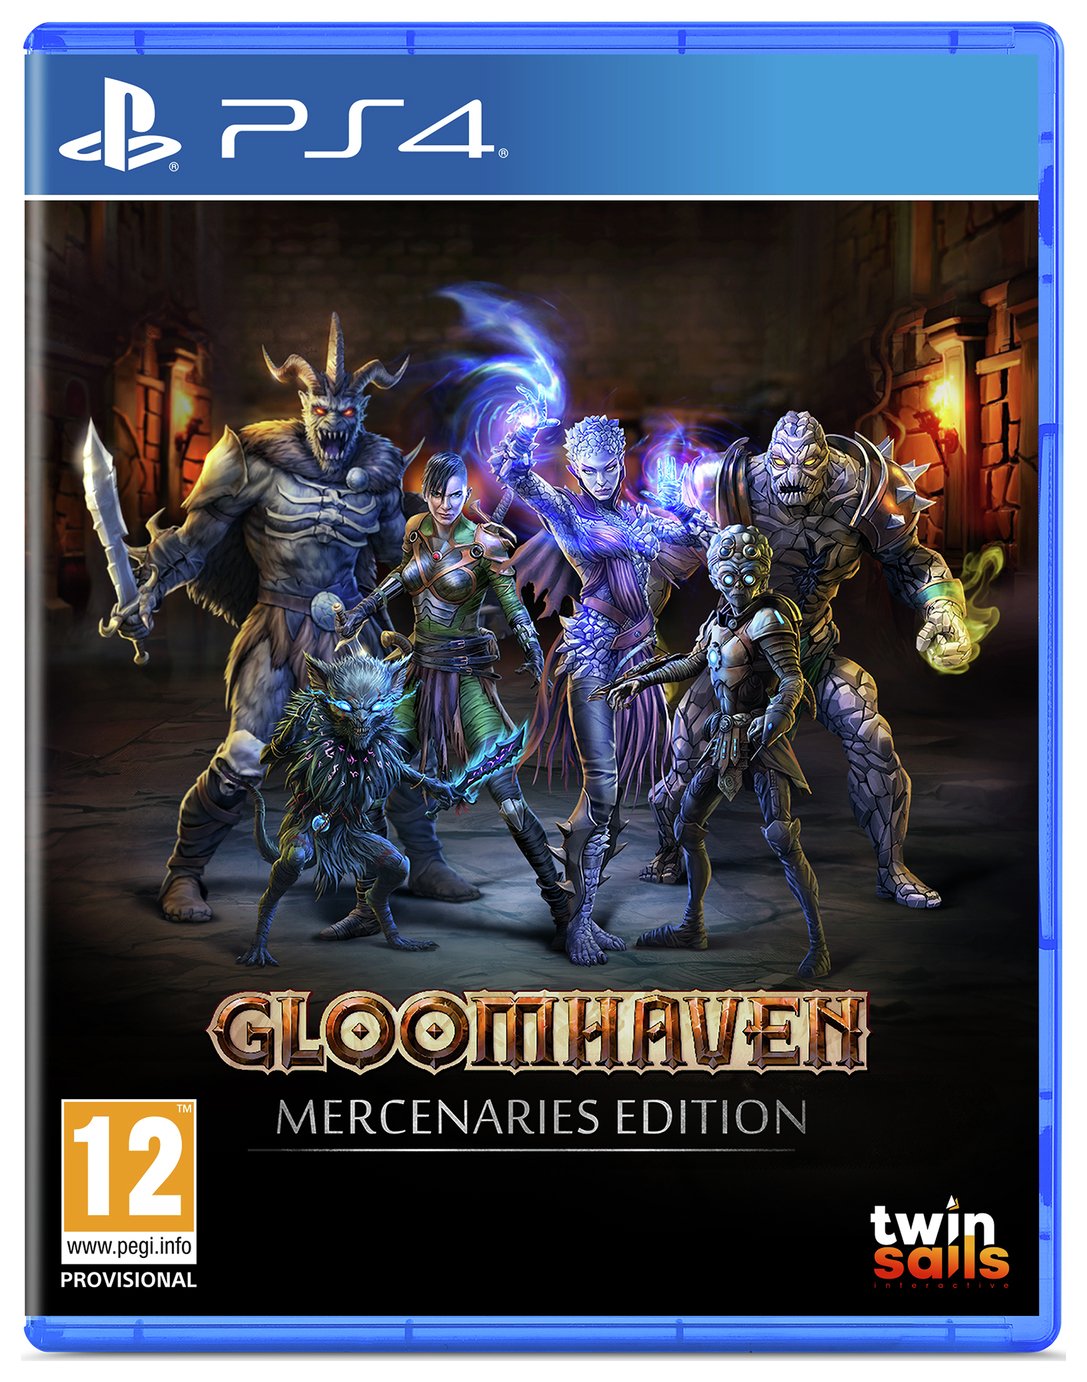 Gloomhaven: Mercenaries Edition PS4 Game